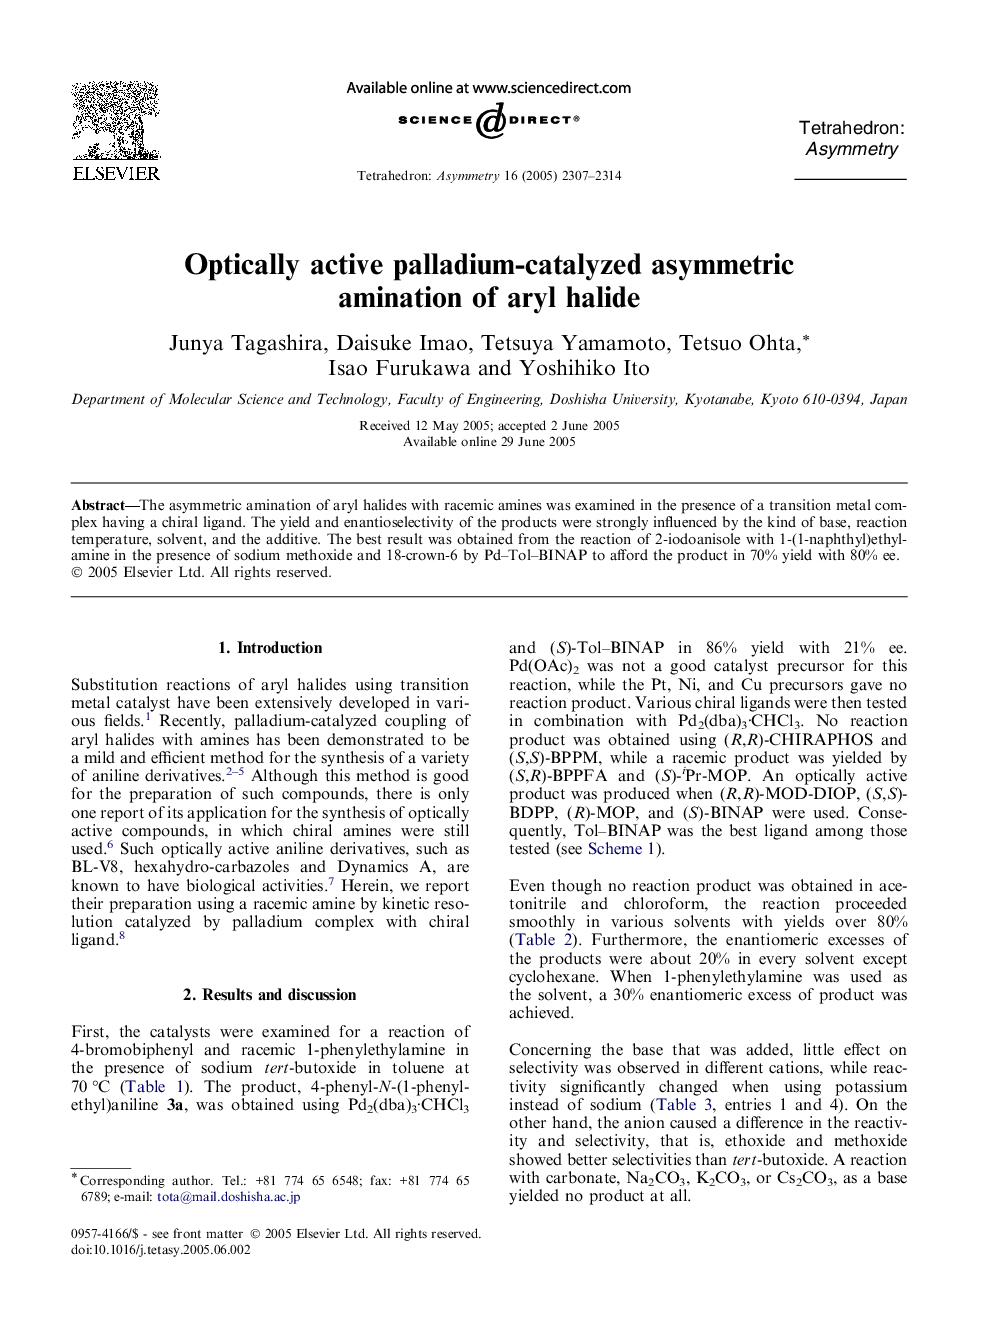 Optically active palladium-catalyzed asymmetric amination of aryl halide